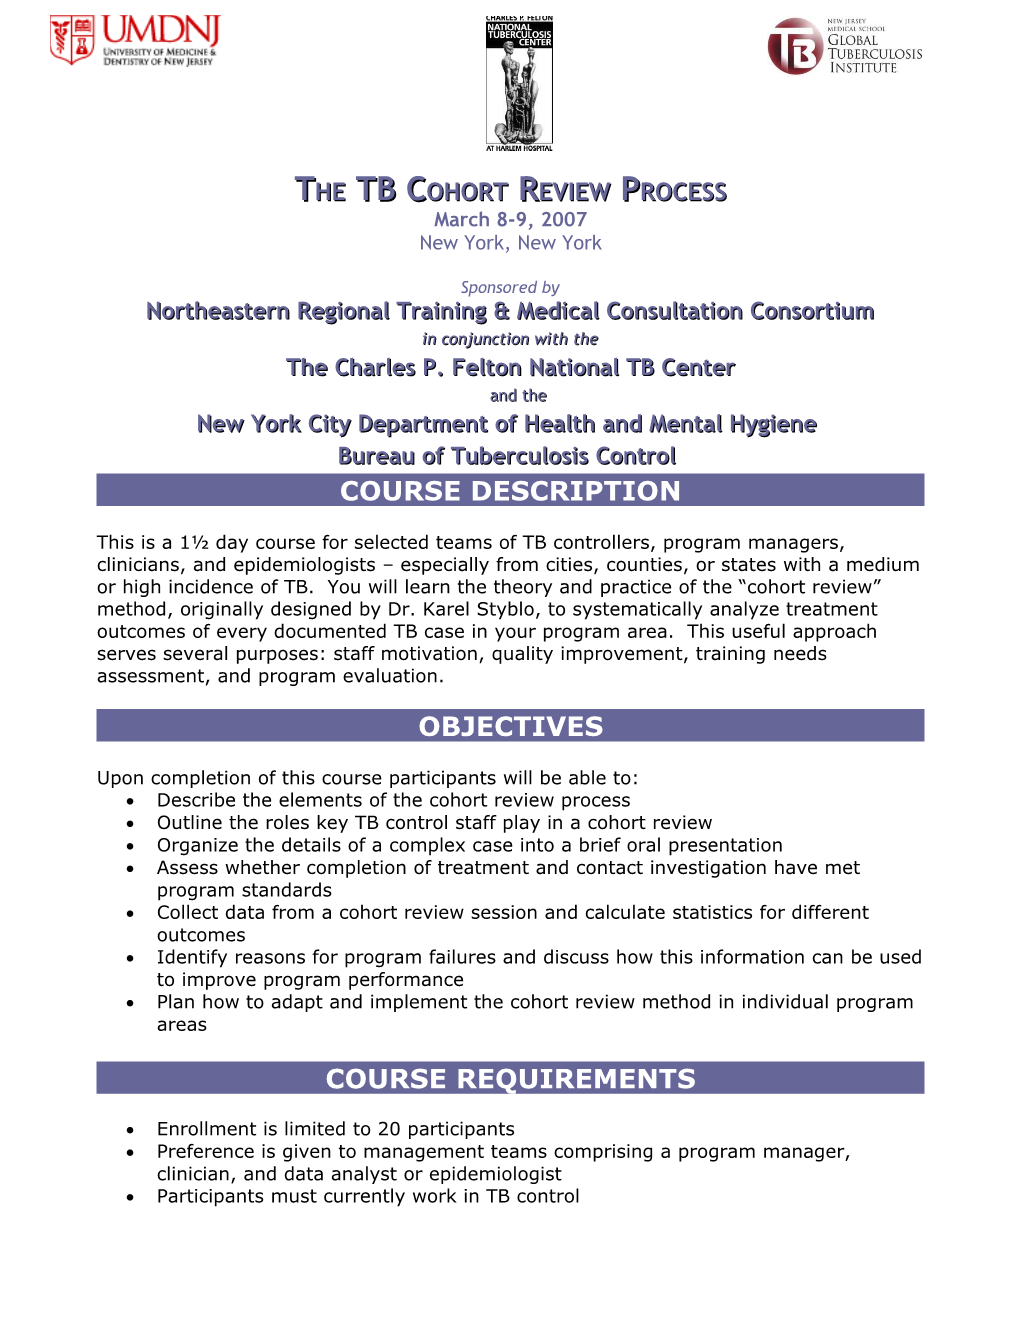 The TB Cohort Review Process